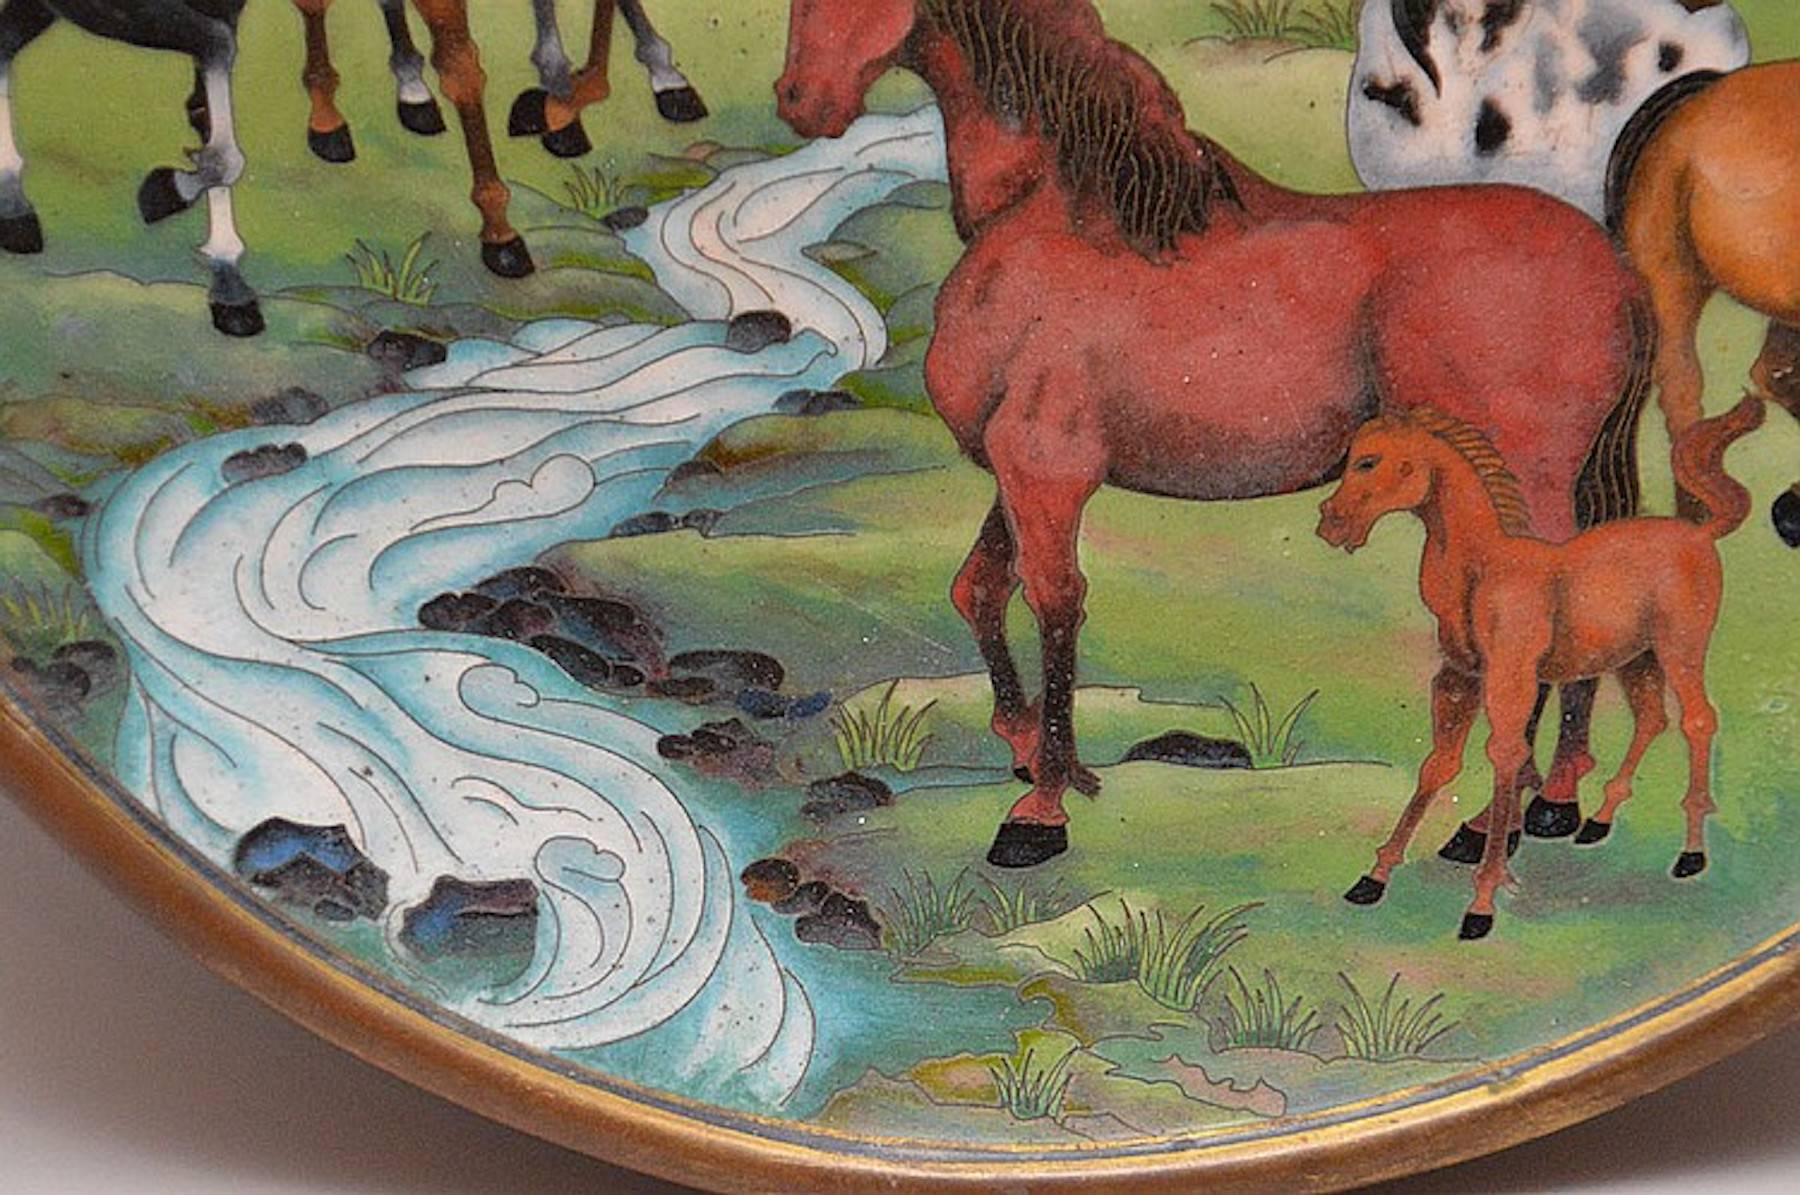 Cloissoné Unusual Equestrian Motif Cloisonné Charger, China, 20th Century For Sale